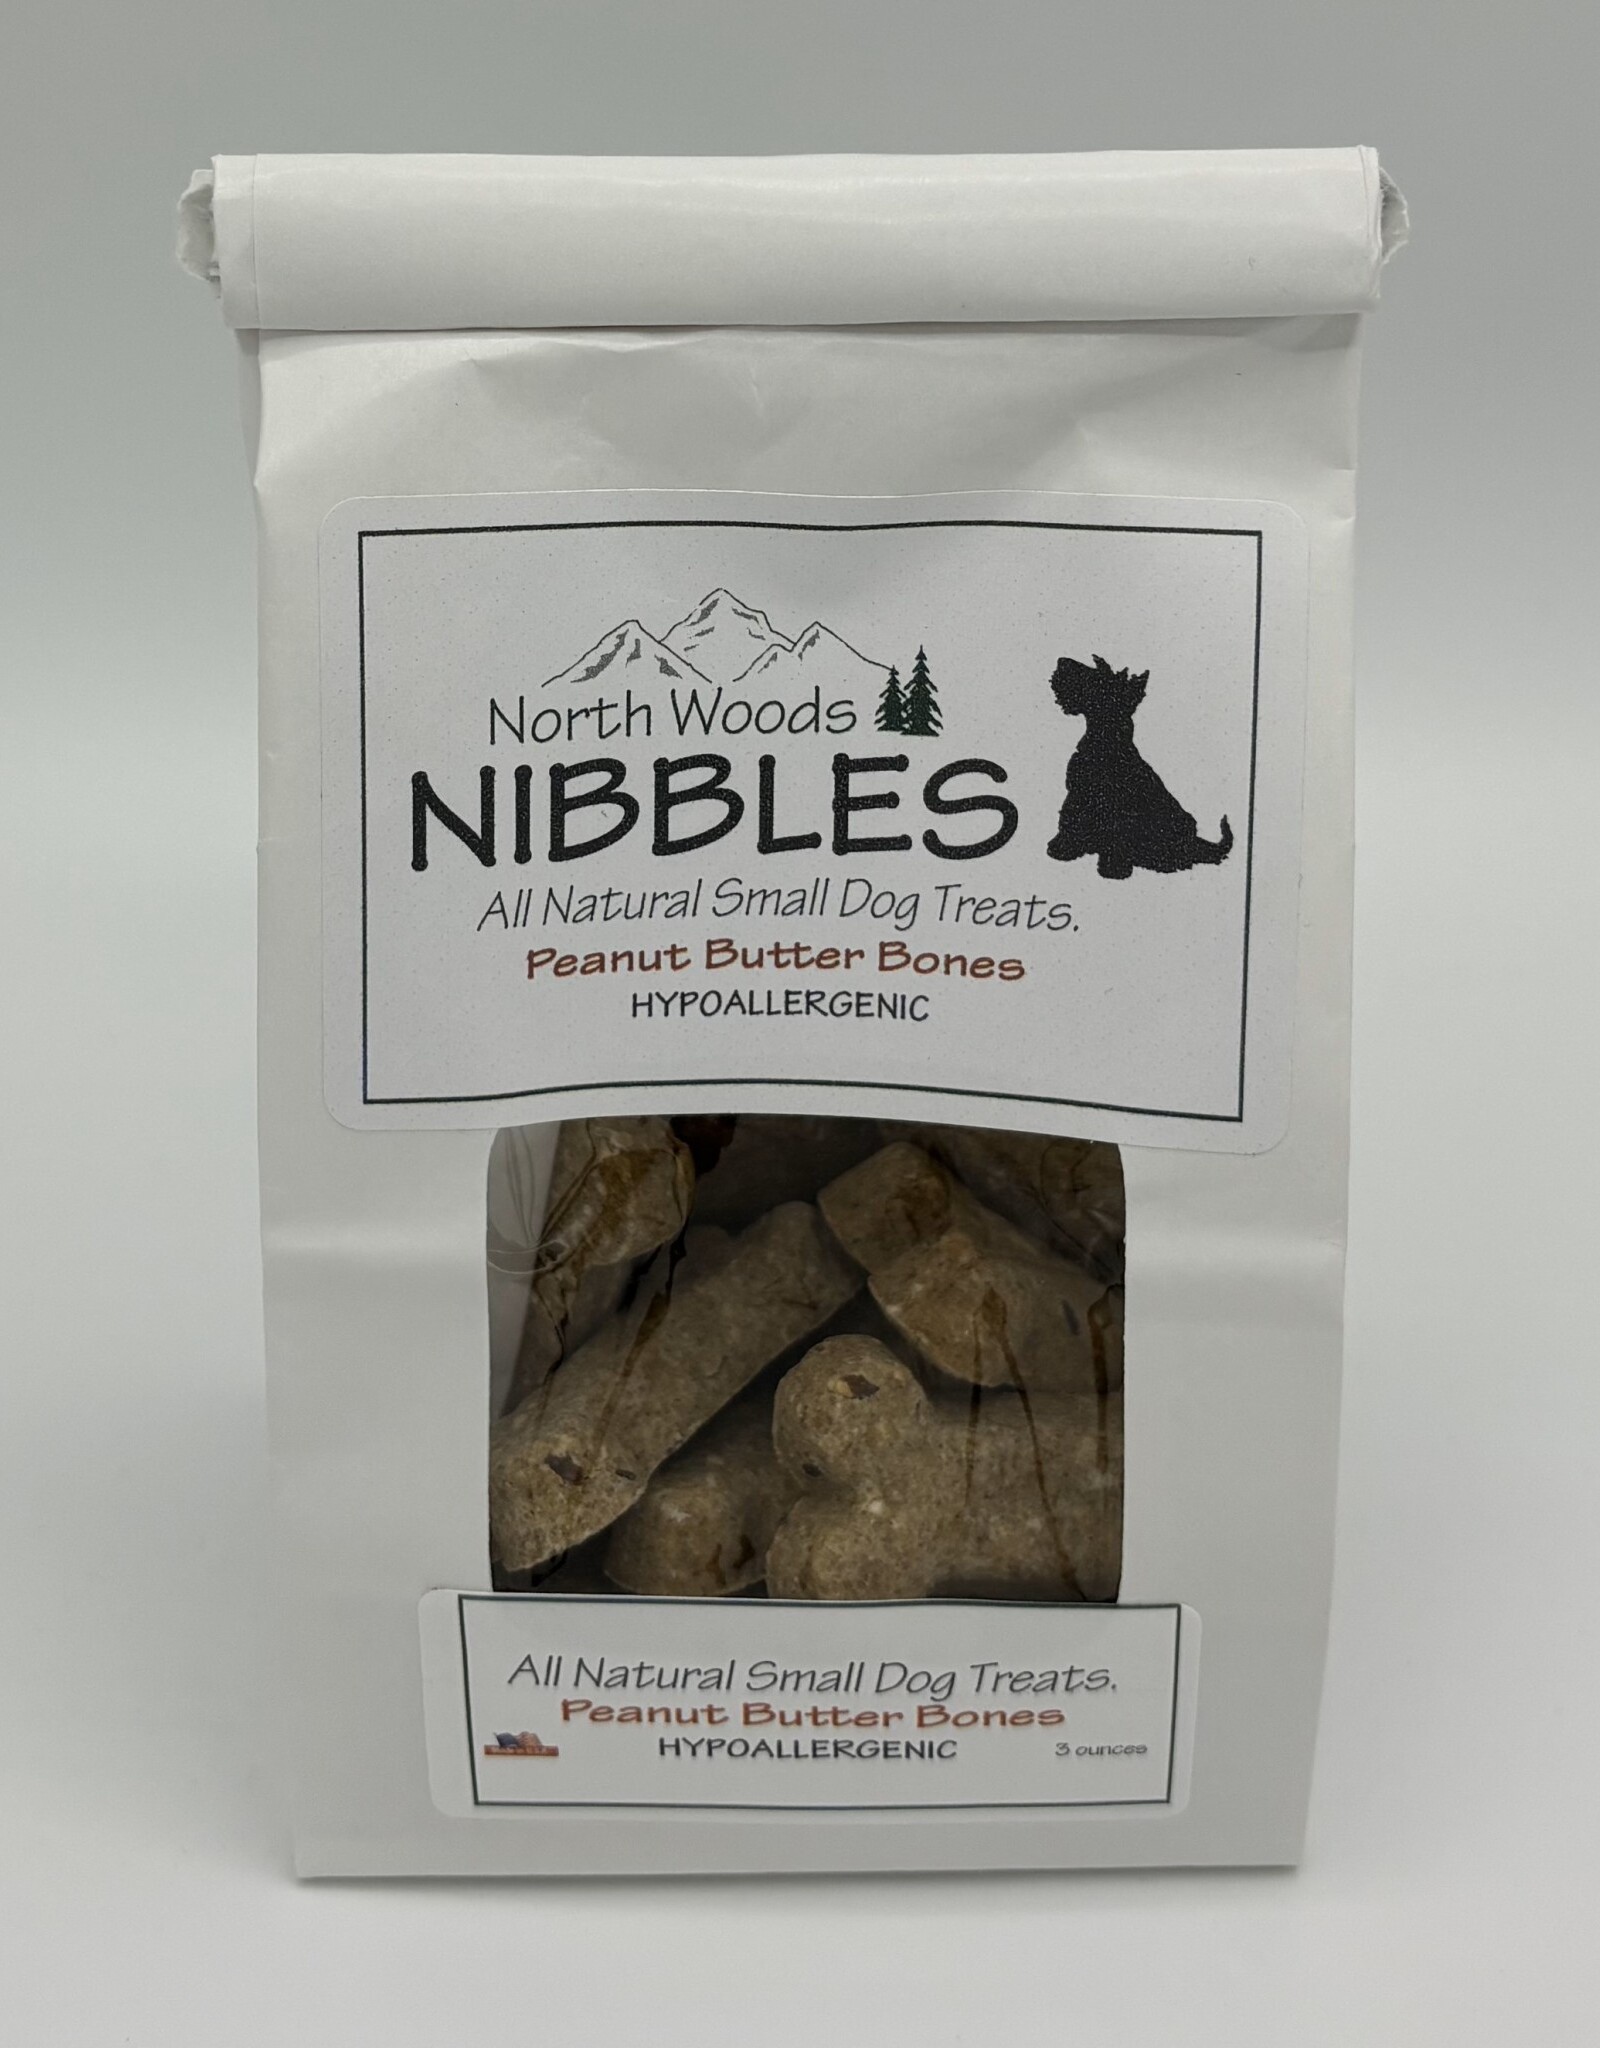 North Woods Animal Treats Peanut Butter Bones 3 oz